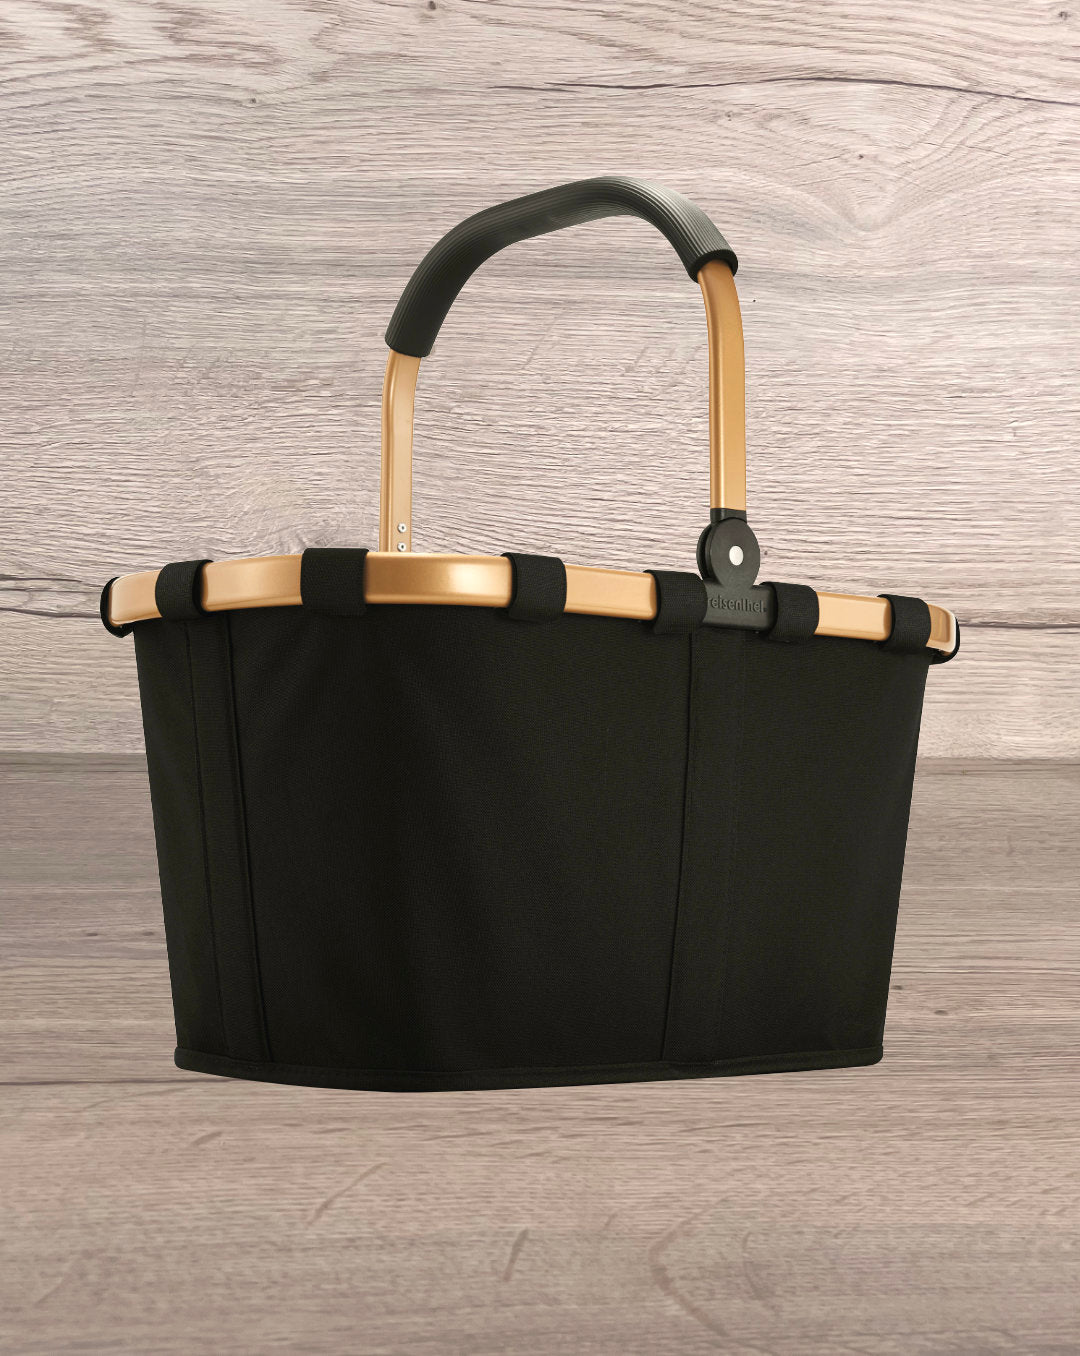 Carrybag - Einkaufskorb - Reisenthel